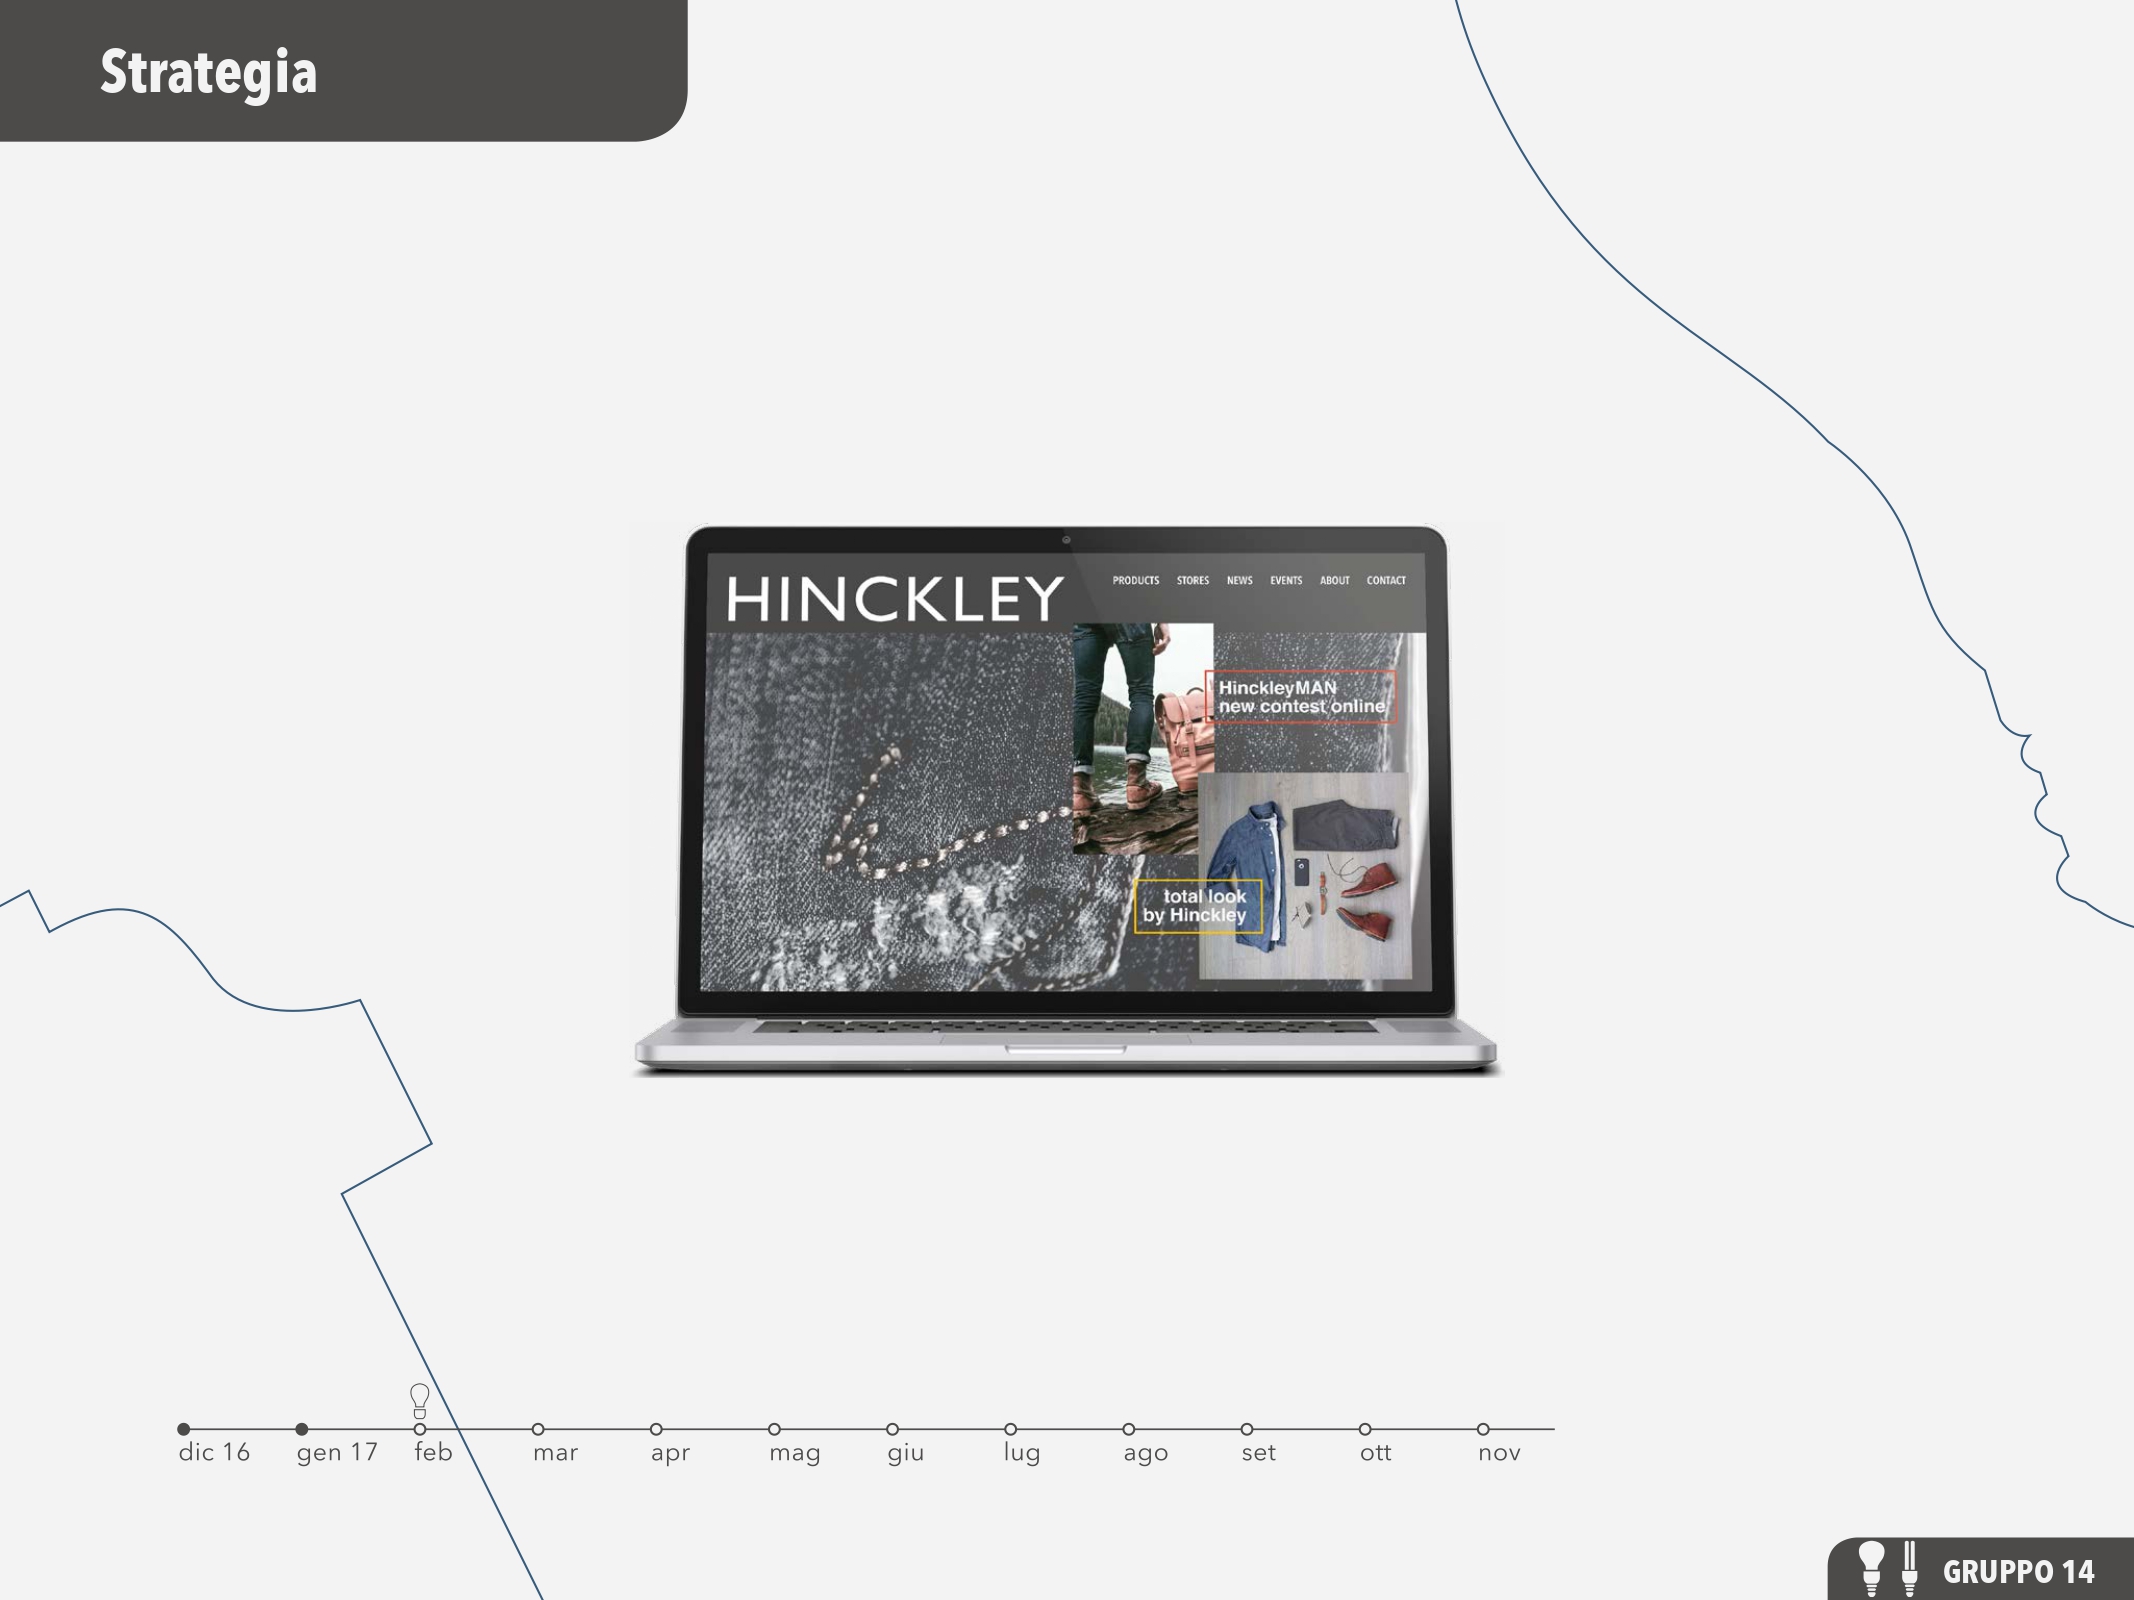 Hinckley Le idee non dormono mai 2016 Strategia George Jimmy Hinckley Mockup 02